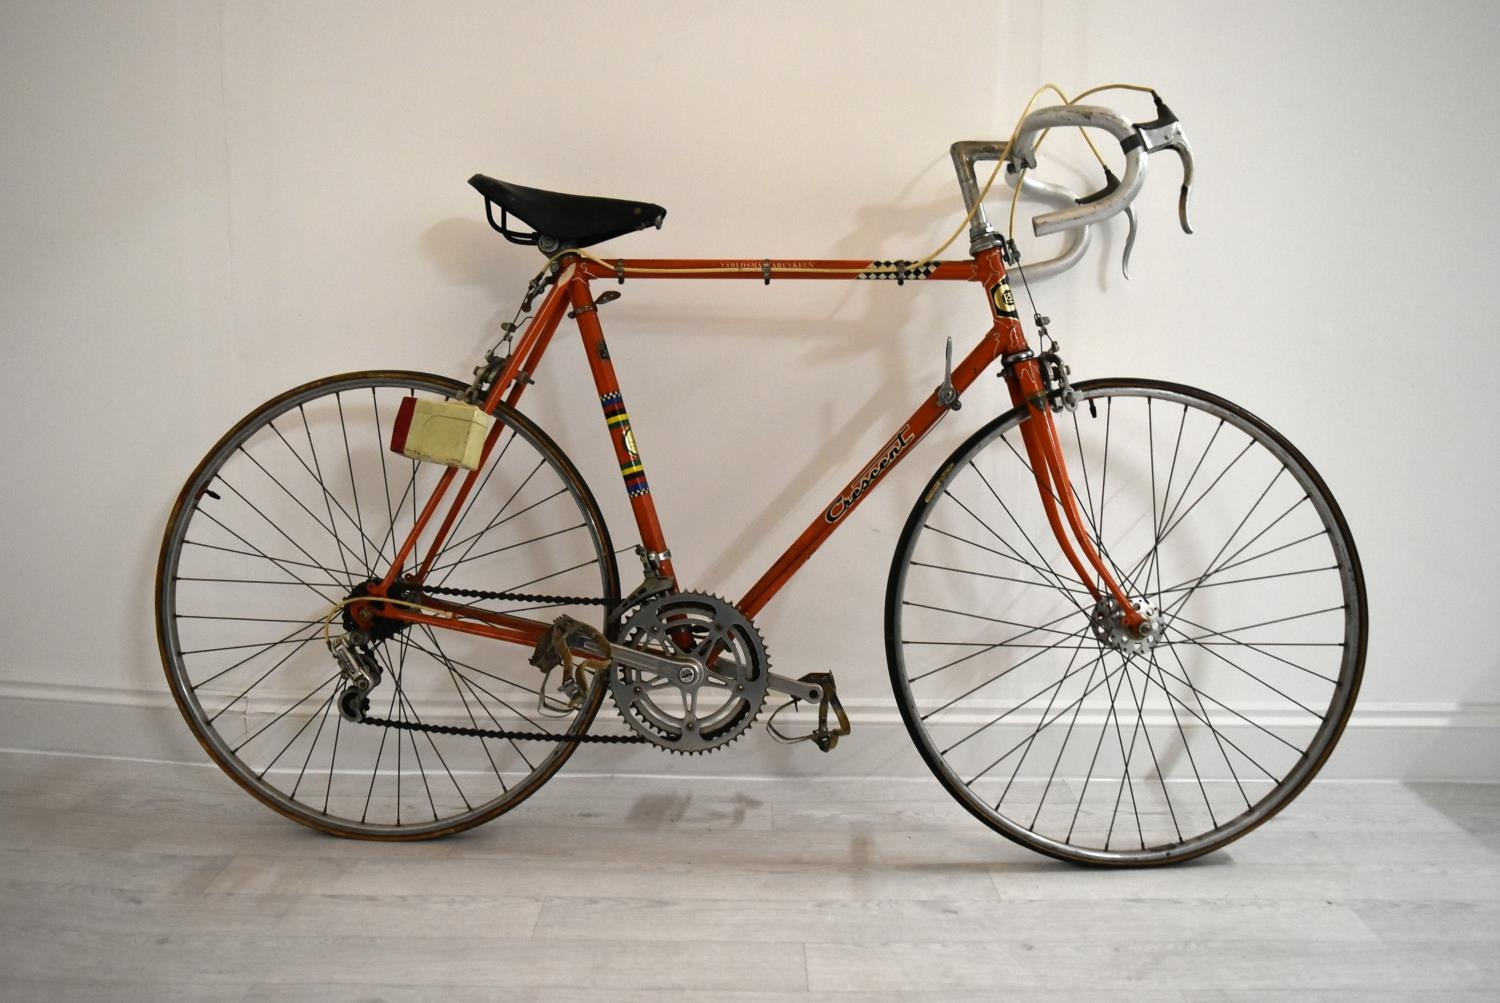 A gentlemen's Crescent bicycle. 23" frame. Wheels Dia.25"